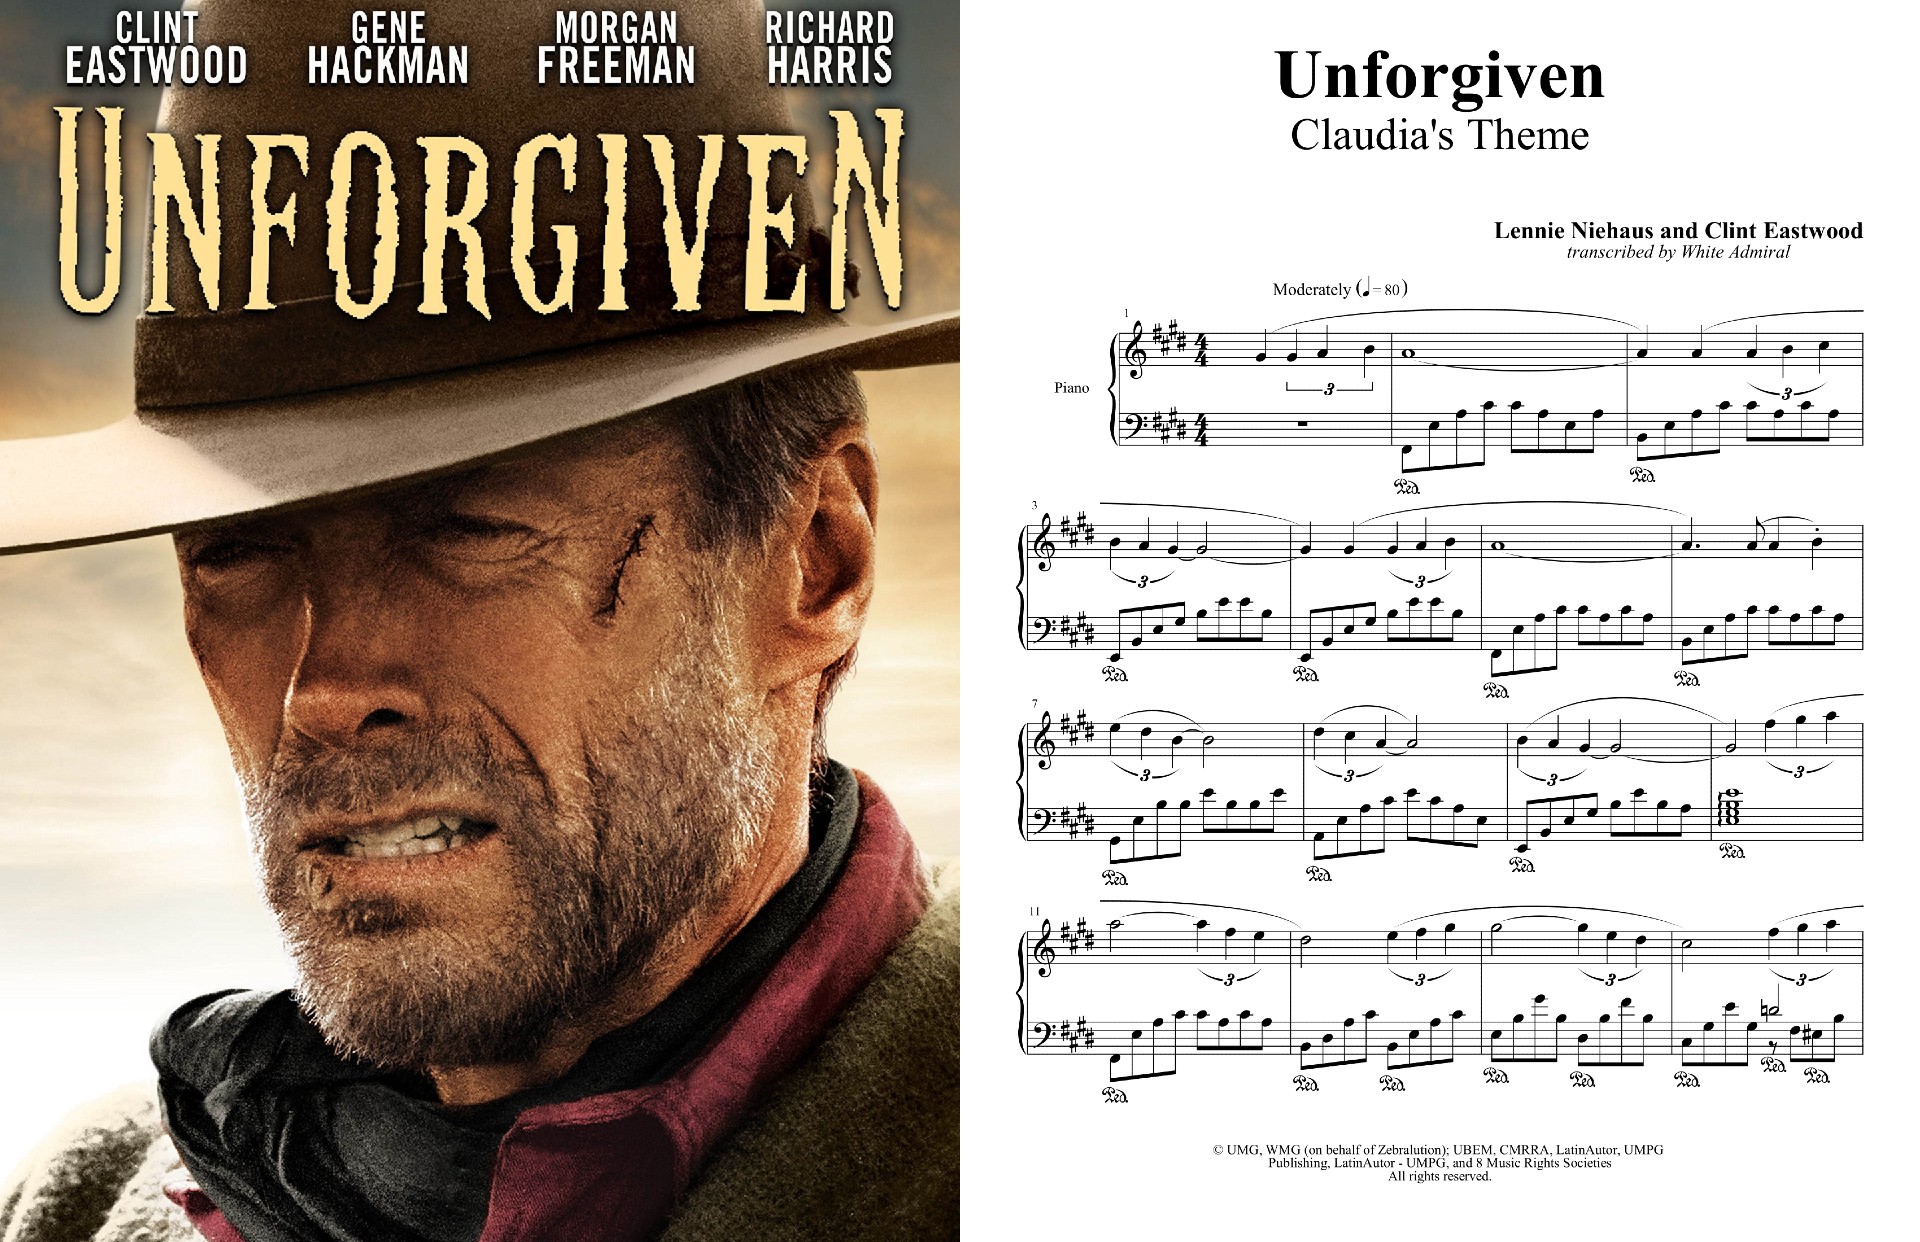 Unforgiven (Claudia's Theme) - Clint Eastwood.jpg